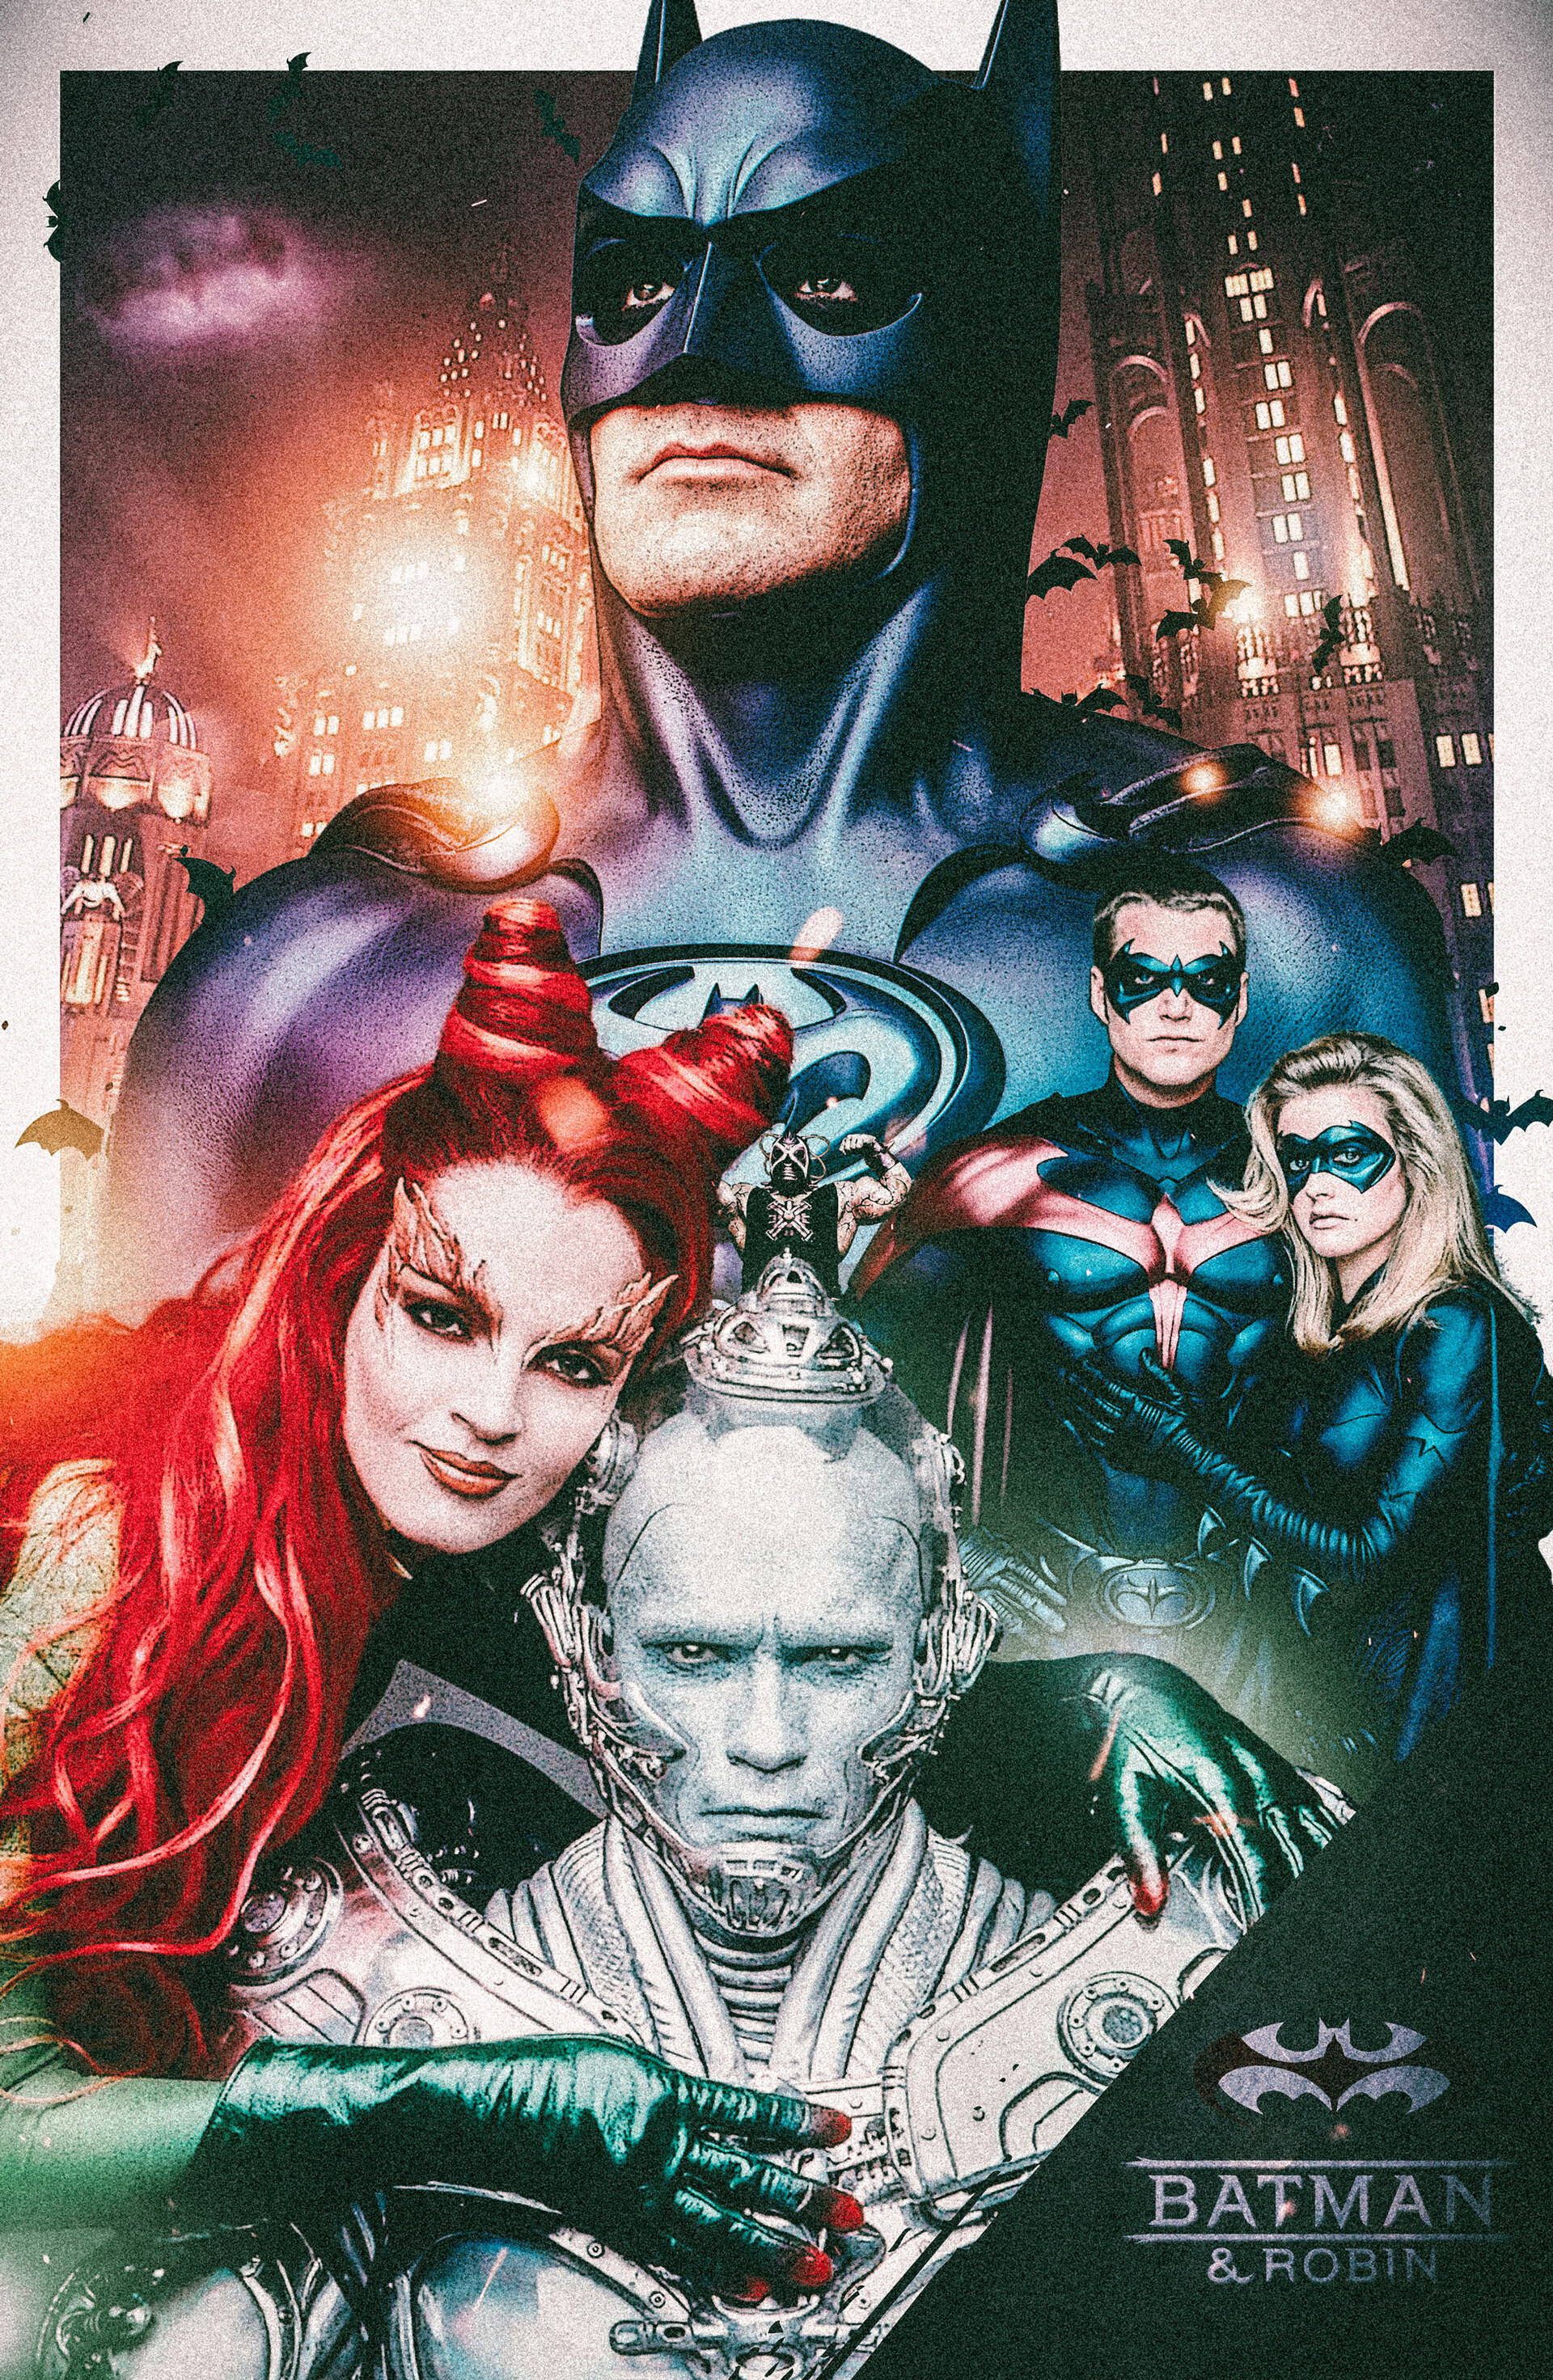 ArtStation - Batman and Robin Alternate Movie Poster by The Movie Poster  Guy, Neemz